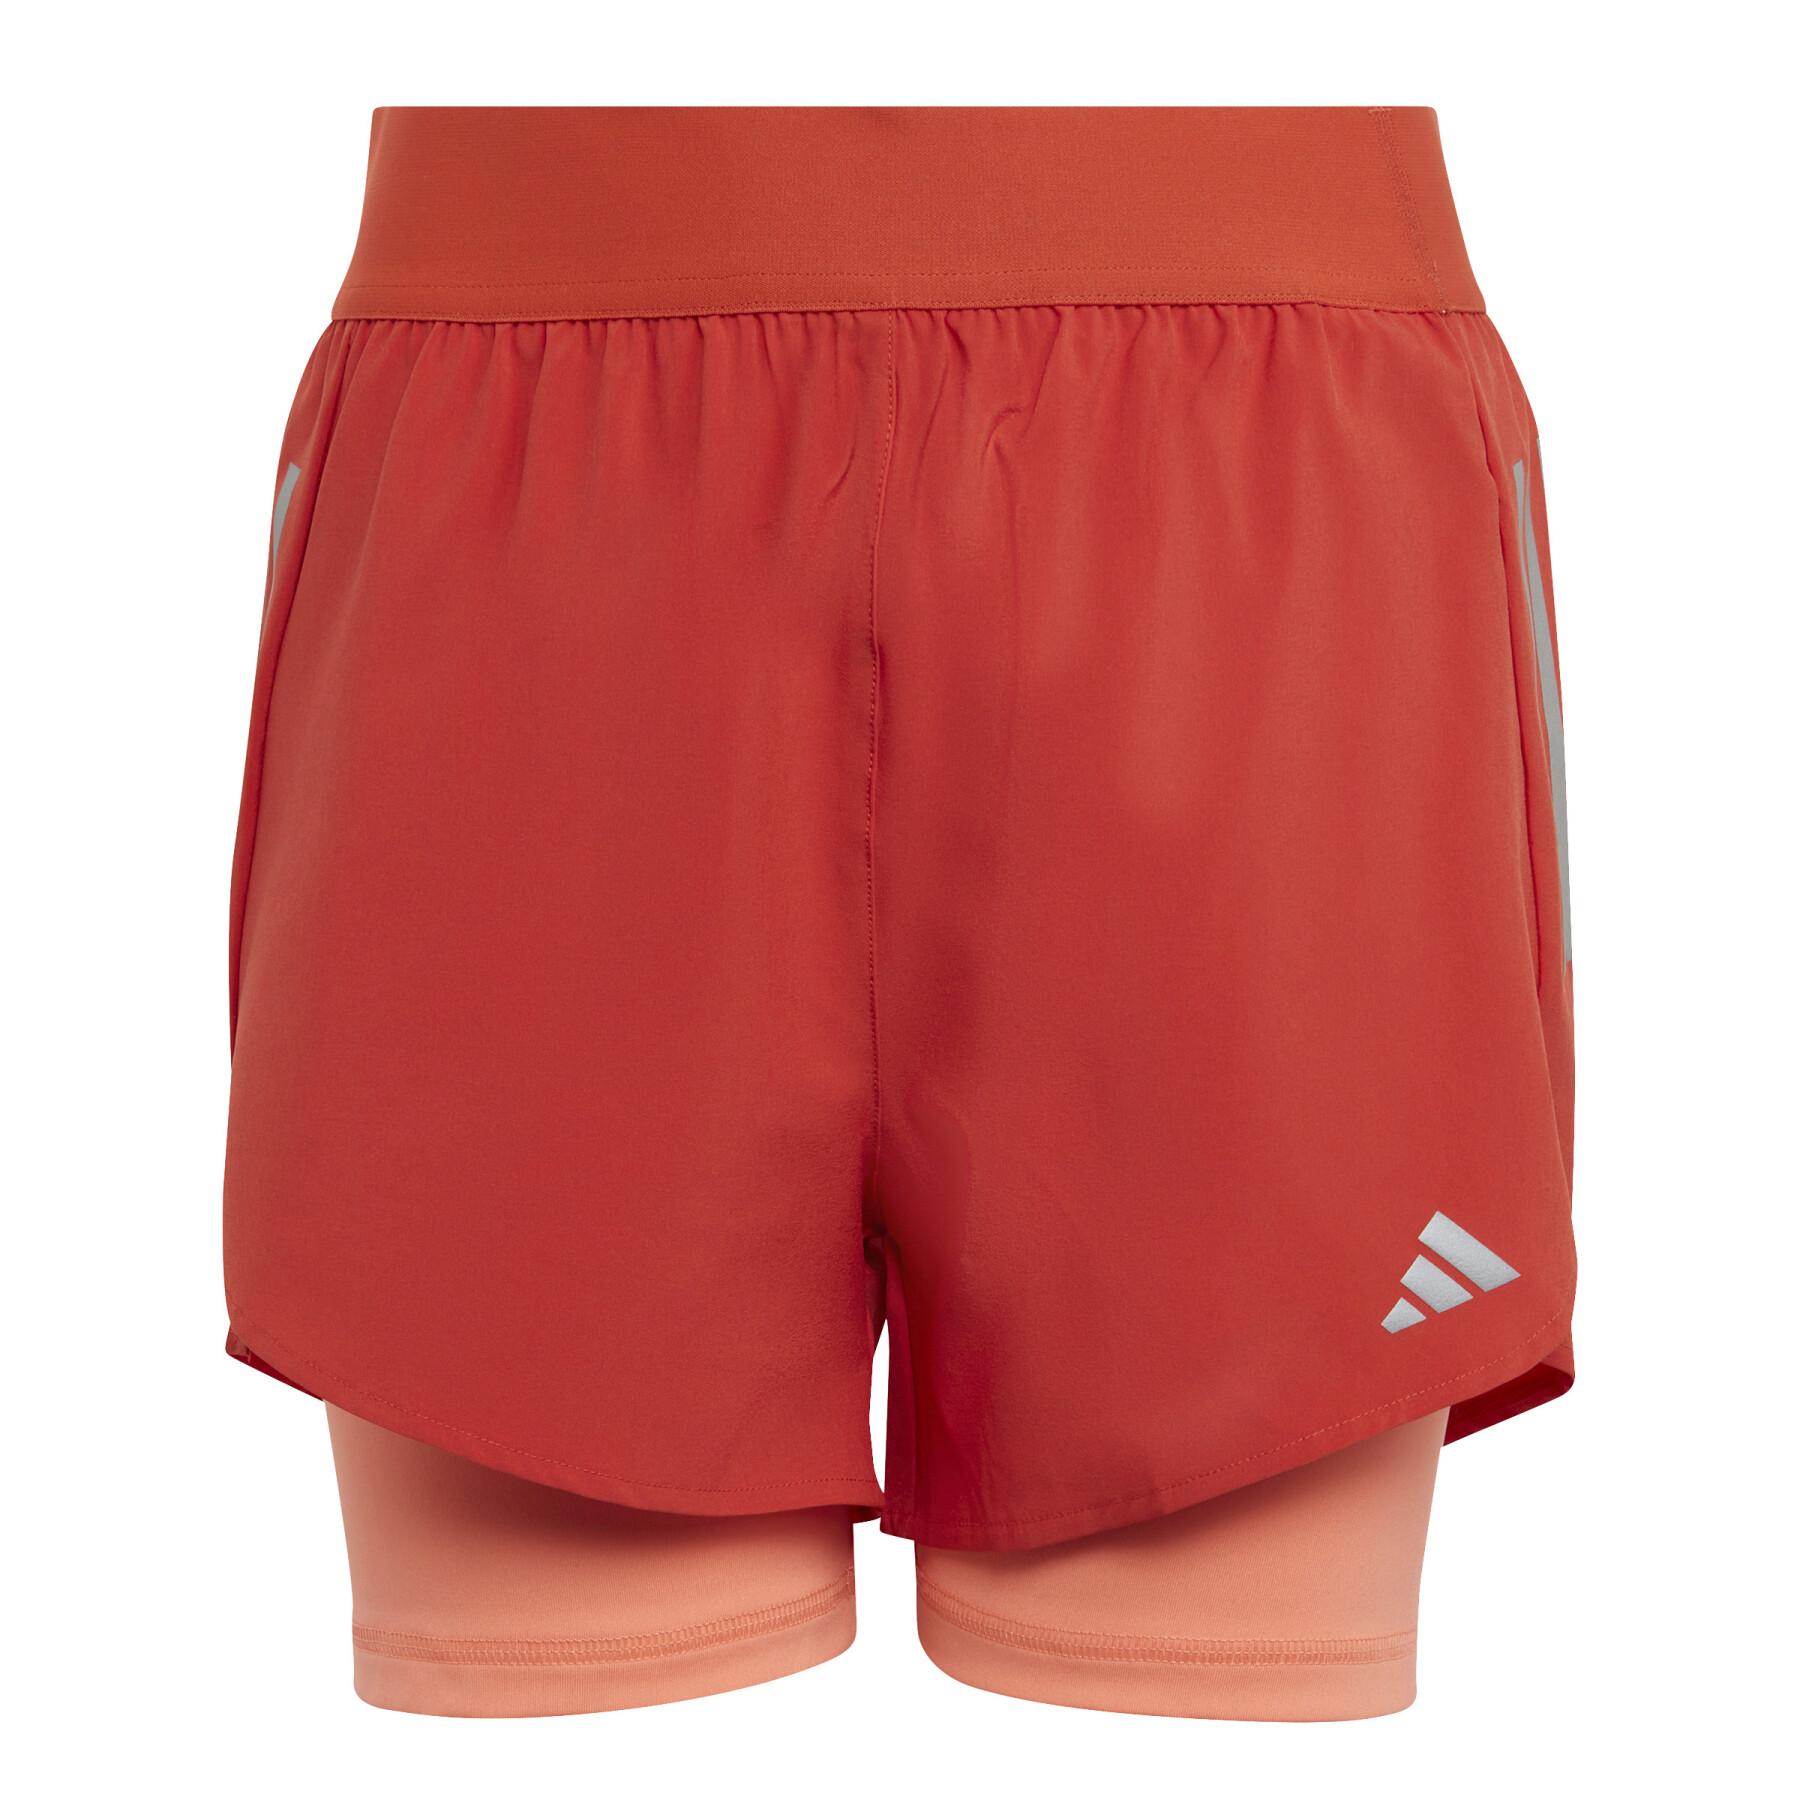 2 in 1 woven shorts for girls adidas Aeroready - adidas - Women's clothing  - Running